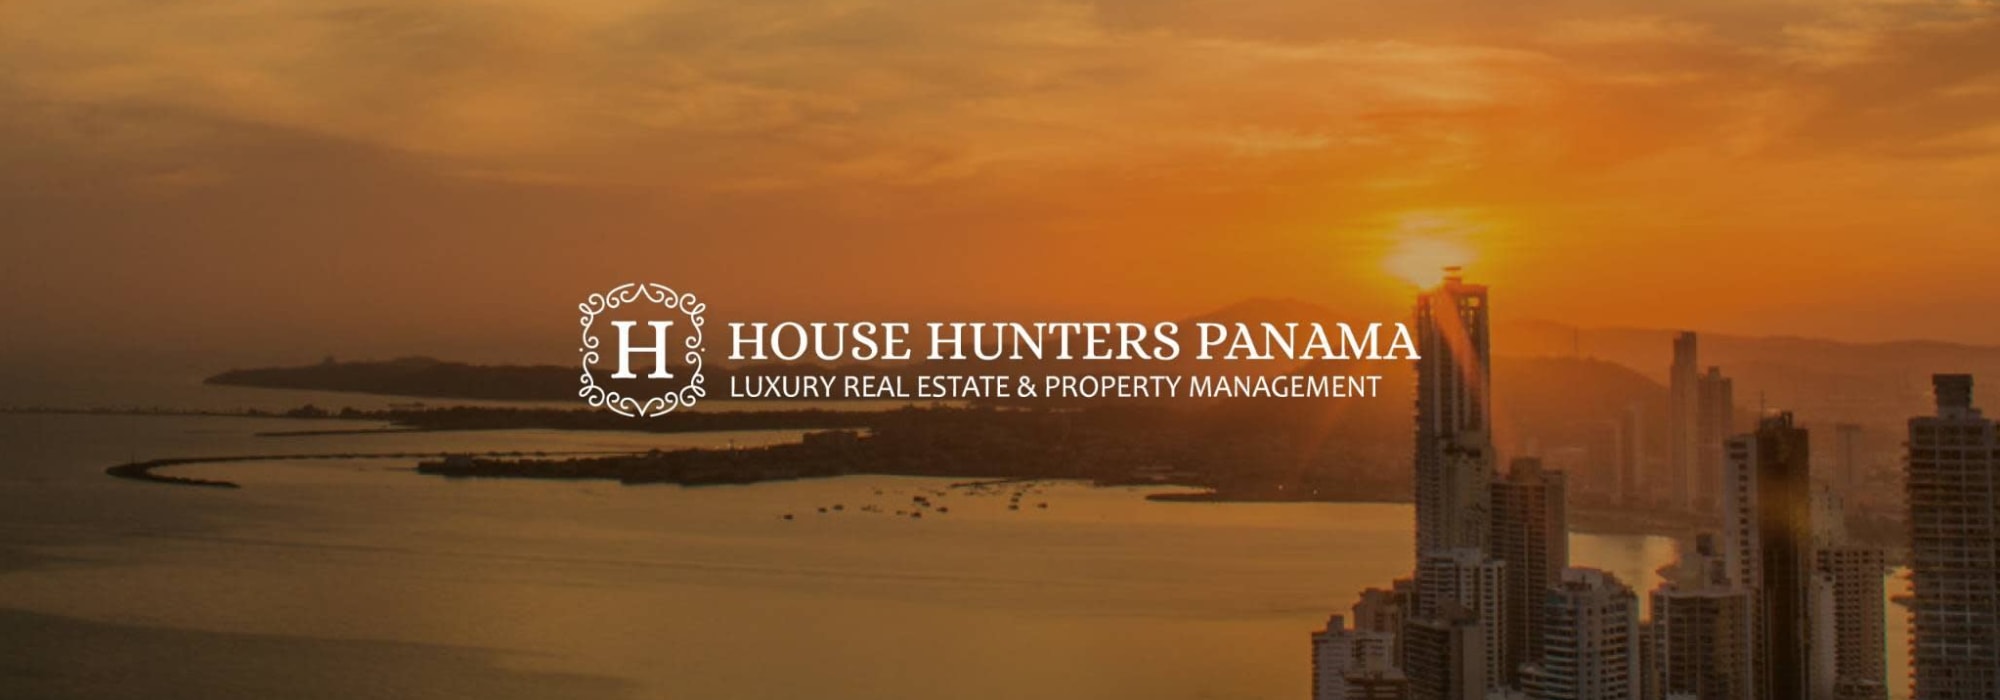 House Hunters Panama